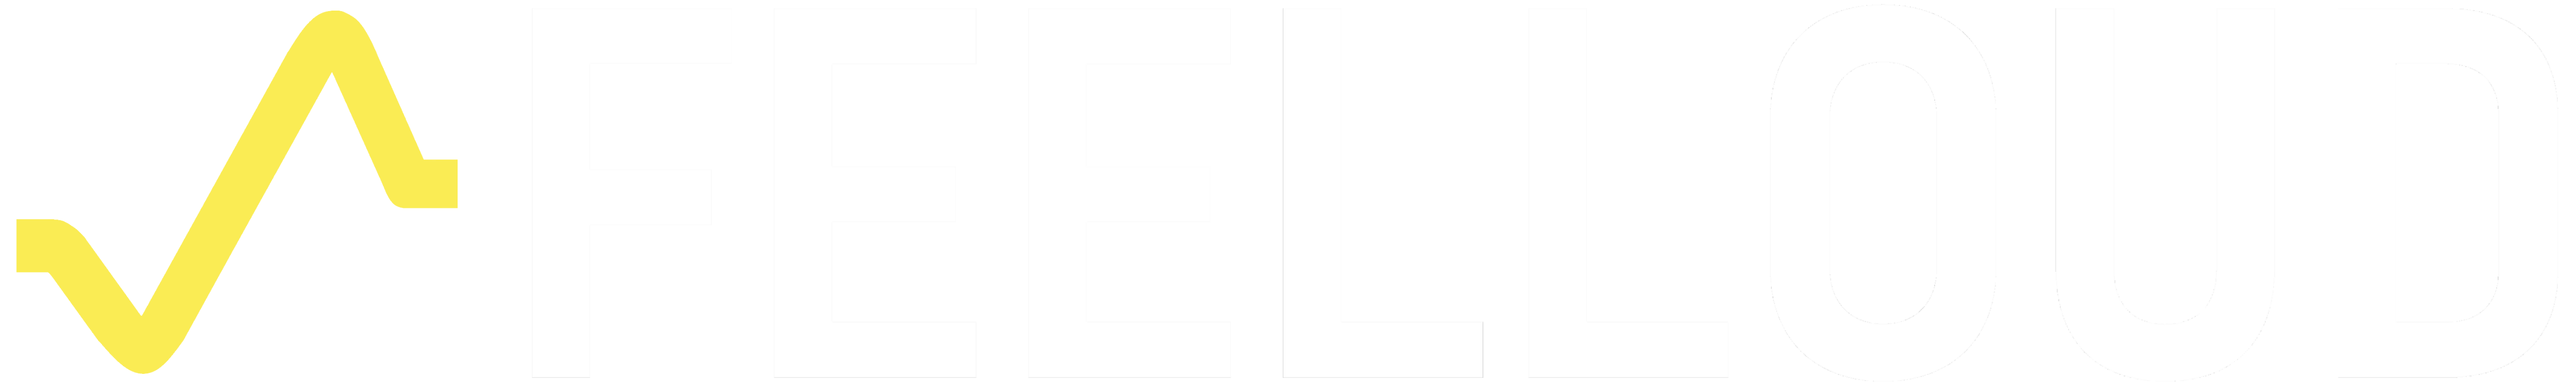 Feelloud logo flat